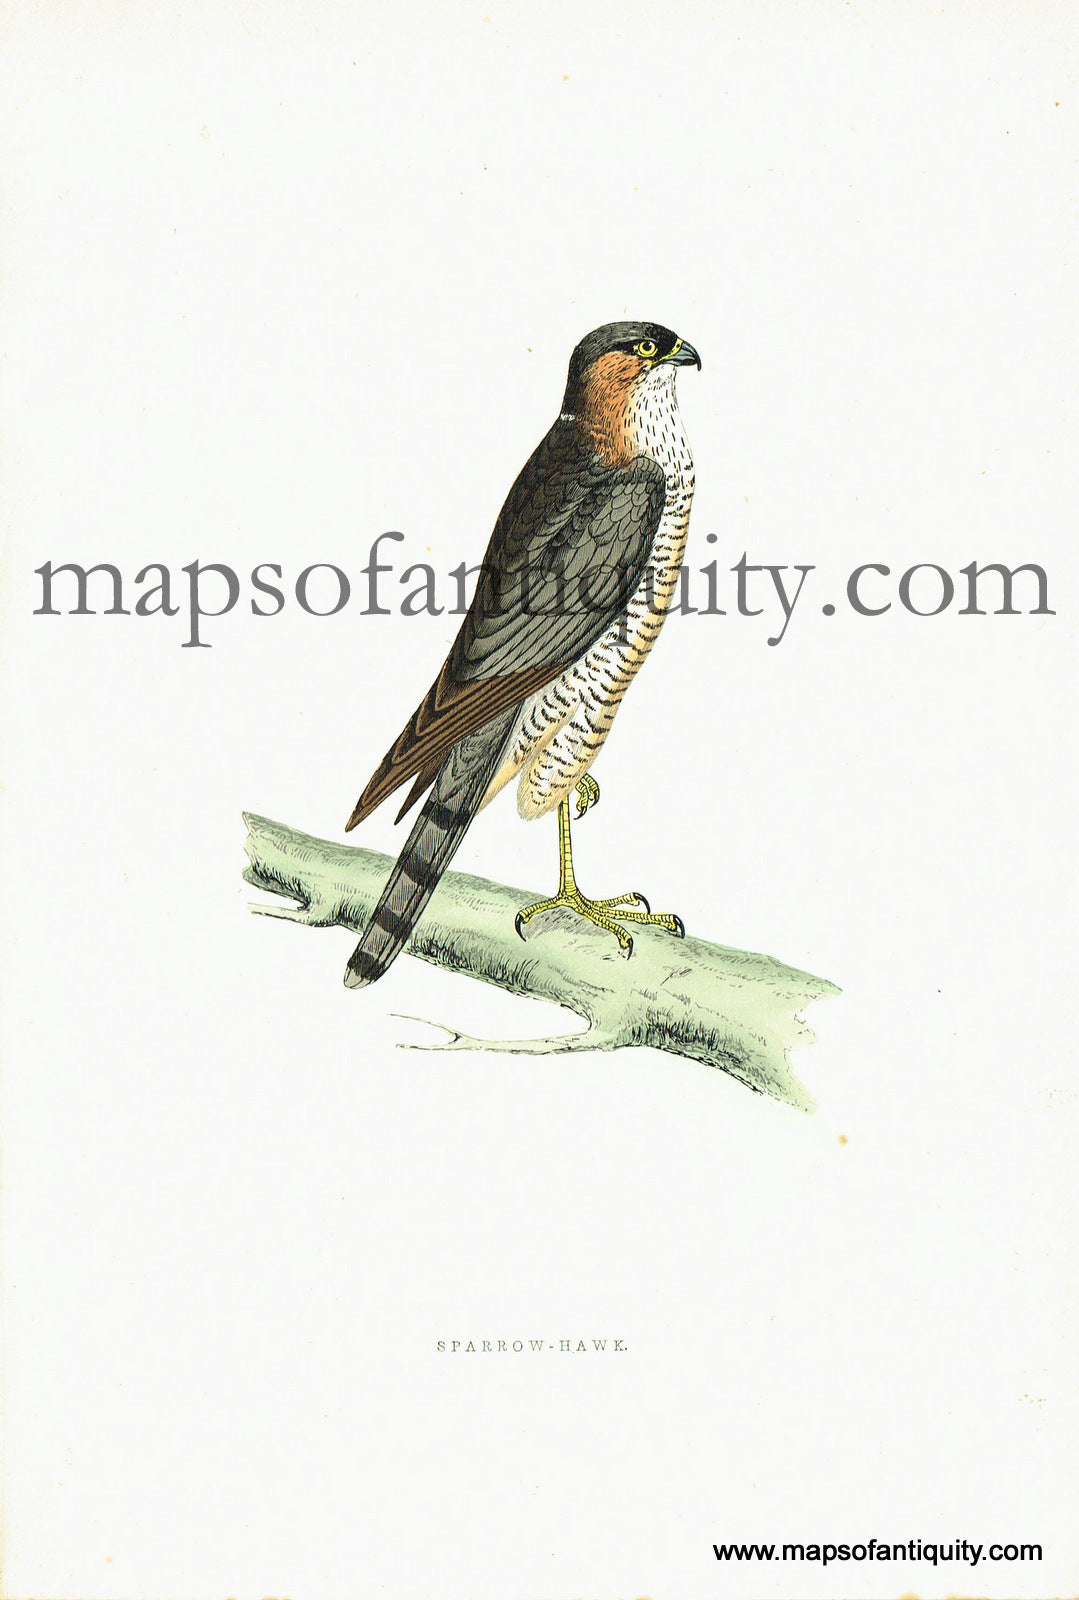 Antique-Hand-Colored-Engraved-Illustration-Sparrow-hawk-Antique-Prints-Natural-History-Birds-c.-1860-Morris-Maps-Of-Antiquity